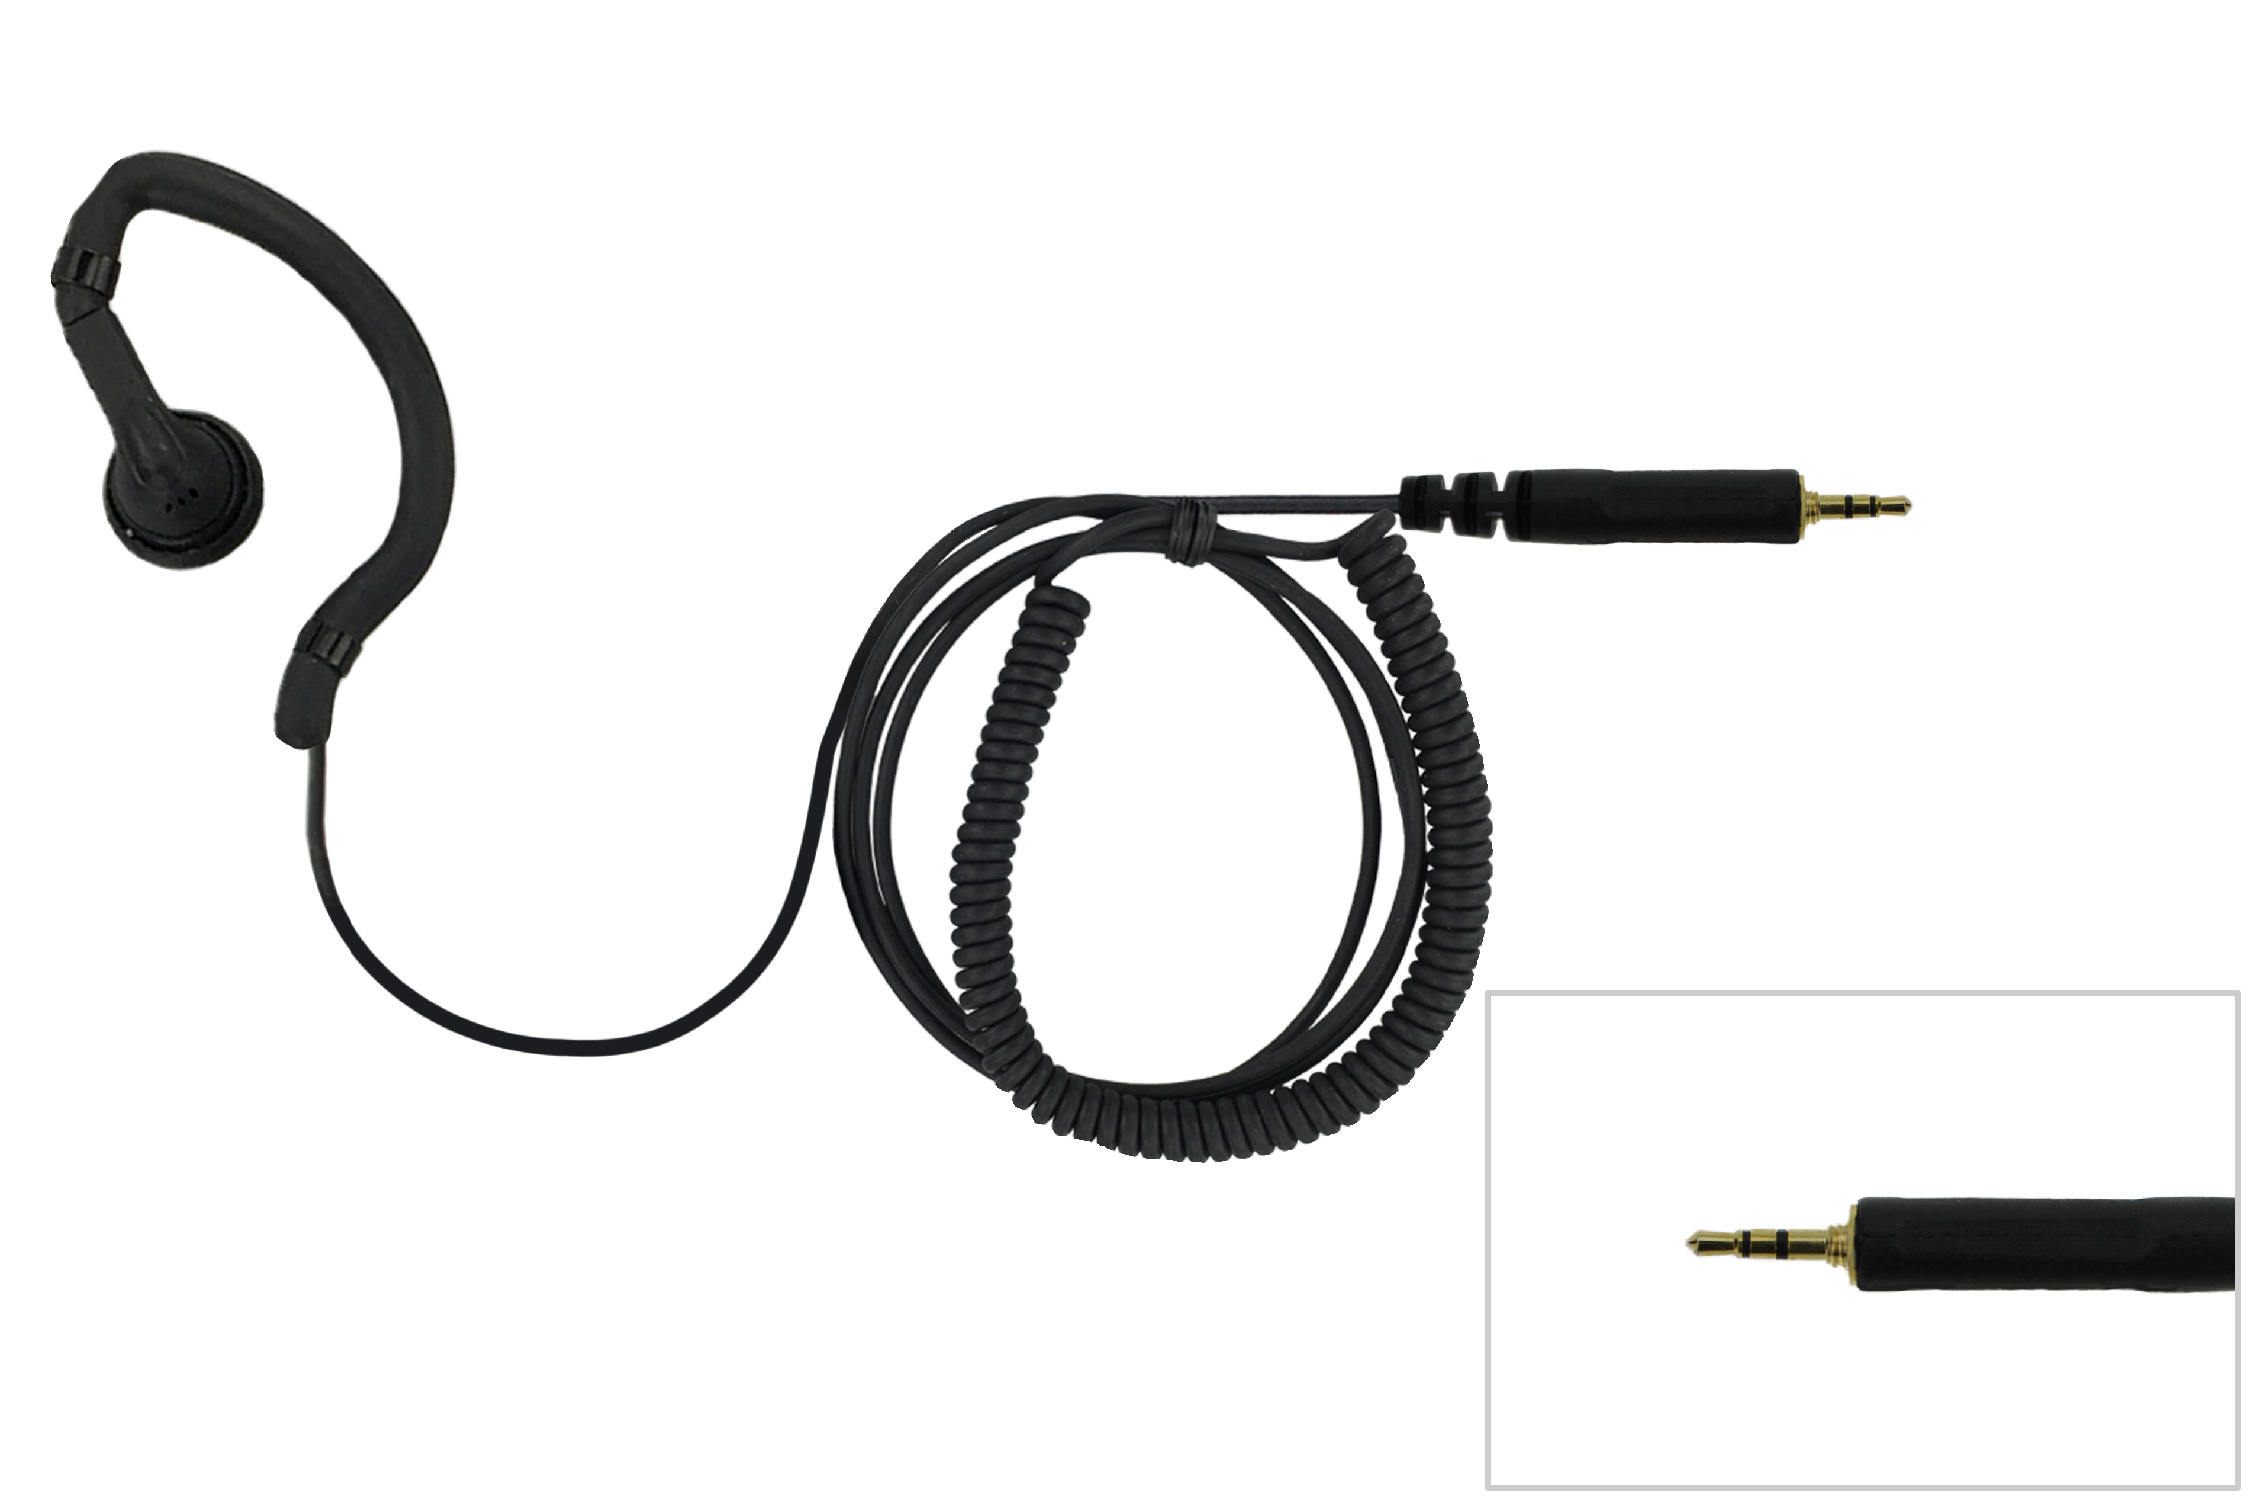 Earbud earpiece with 3.5mm threaded plug